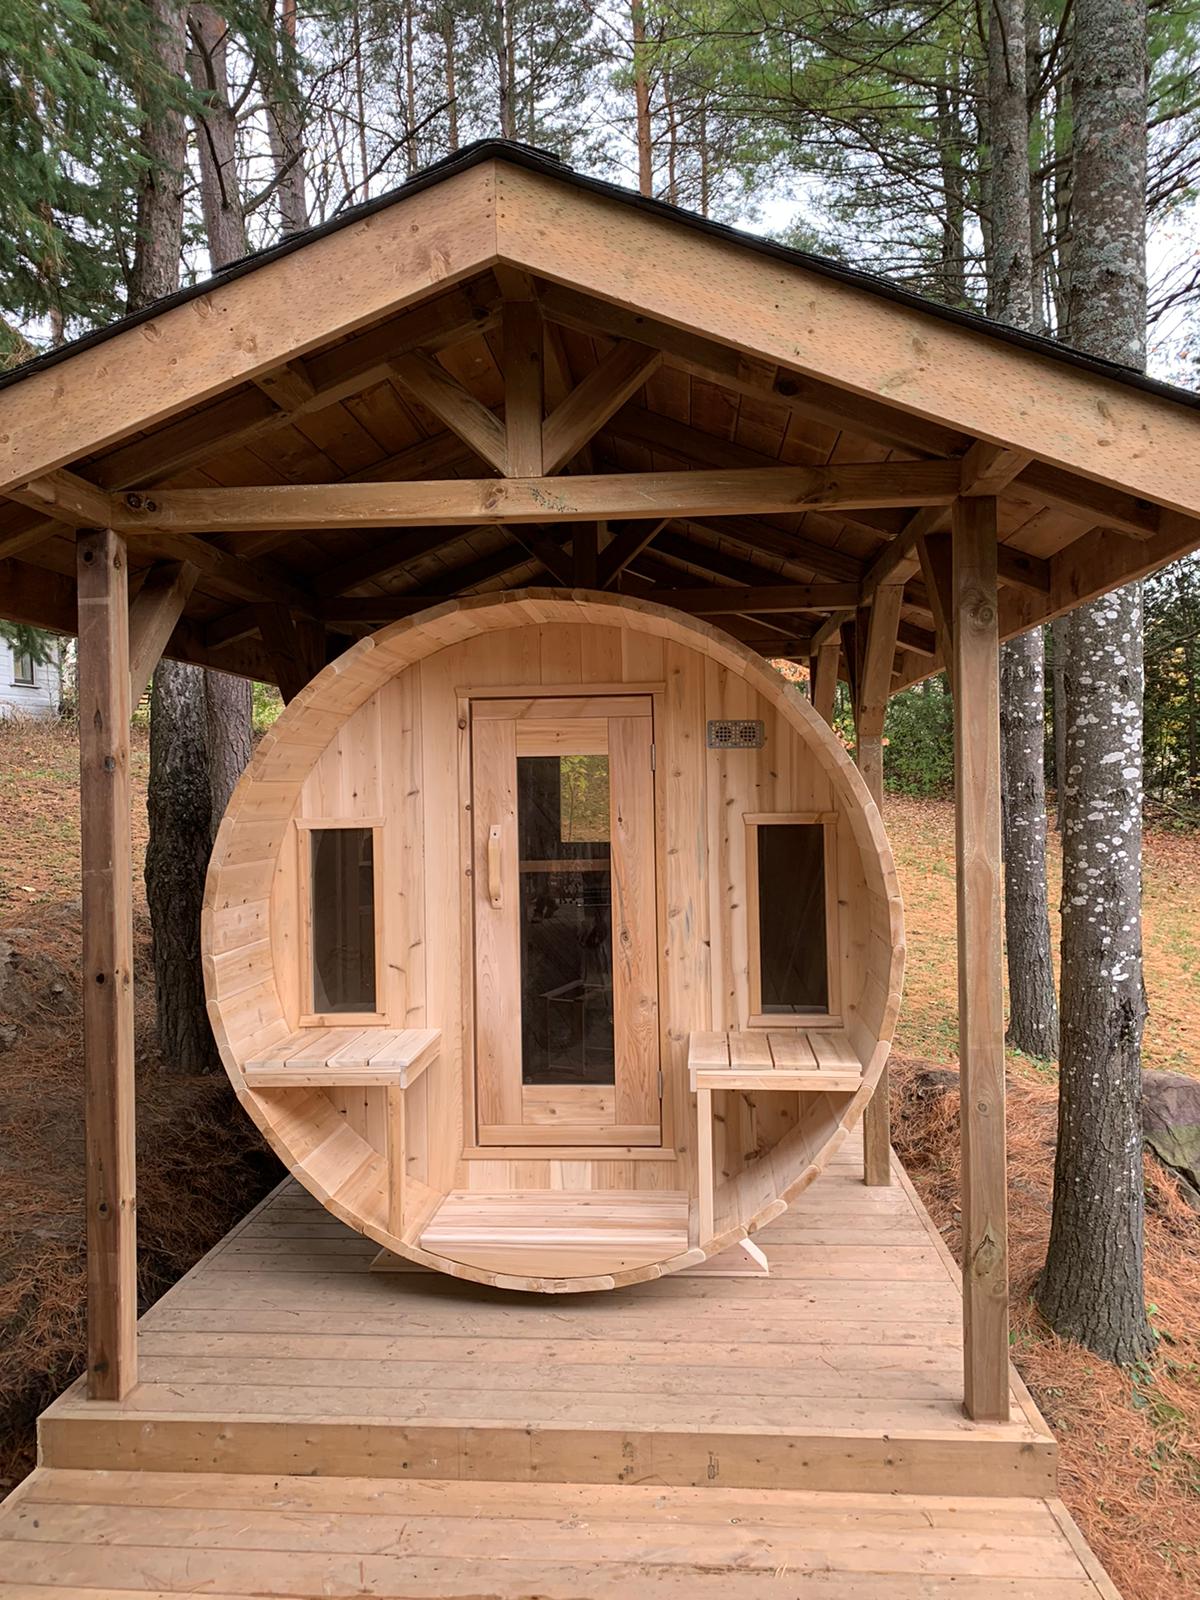 Canadian Timber Tranquility Barrel Sauna - Buy Your Adventure